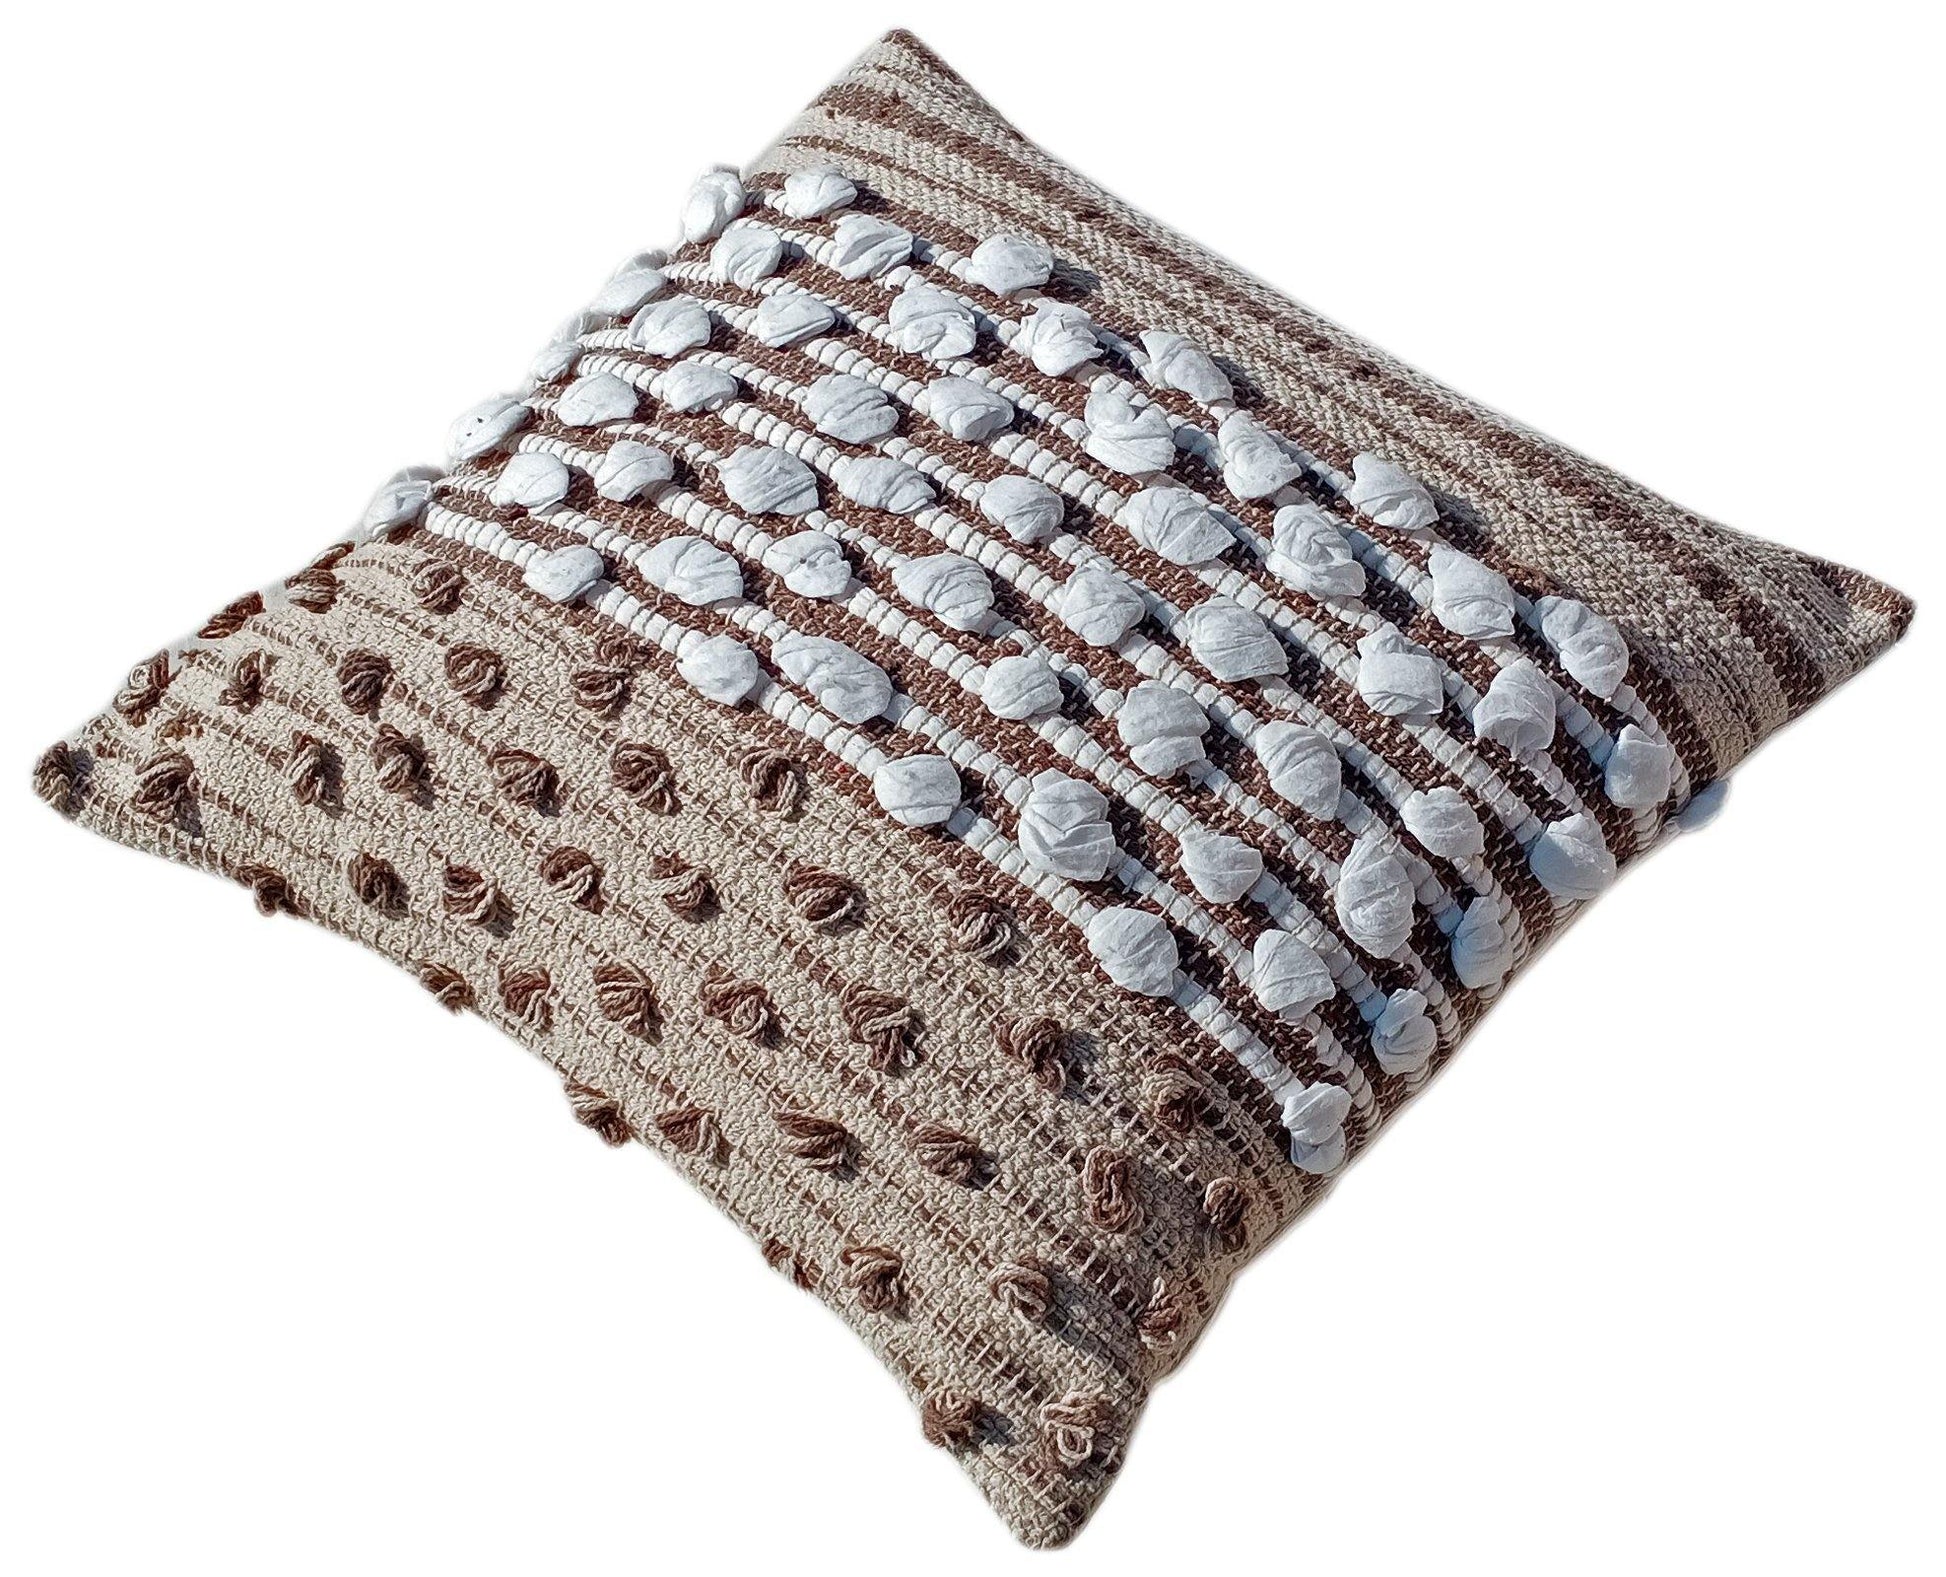 18" Designer Cushion Cover -Beads - The Teal Thread